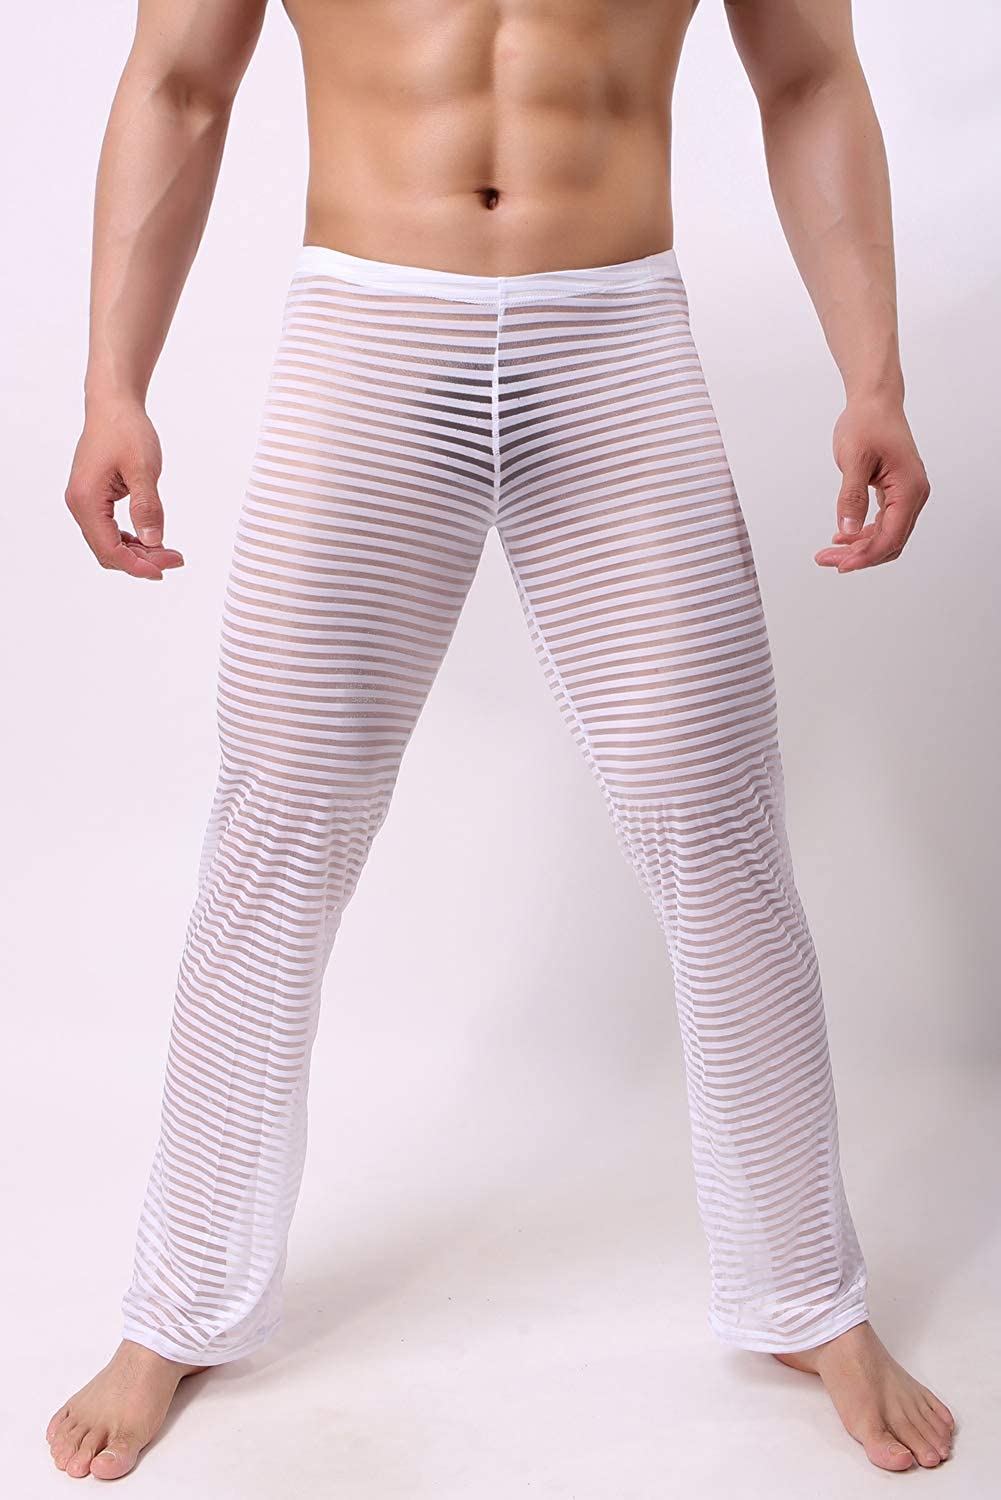 KAMUON Menâs Summer Sexy Mesh See Thru Stretchy Lightweight Sleep Lounge Pants | eBay